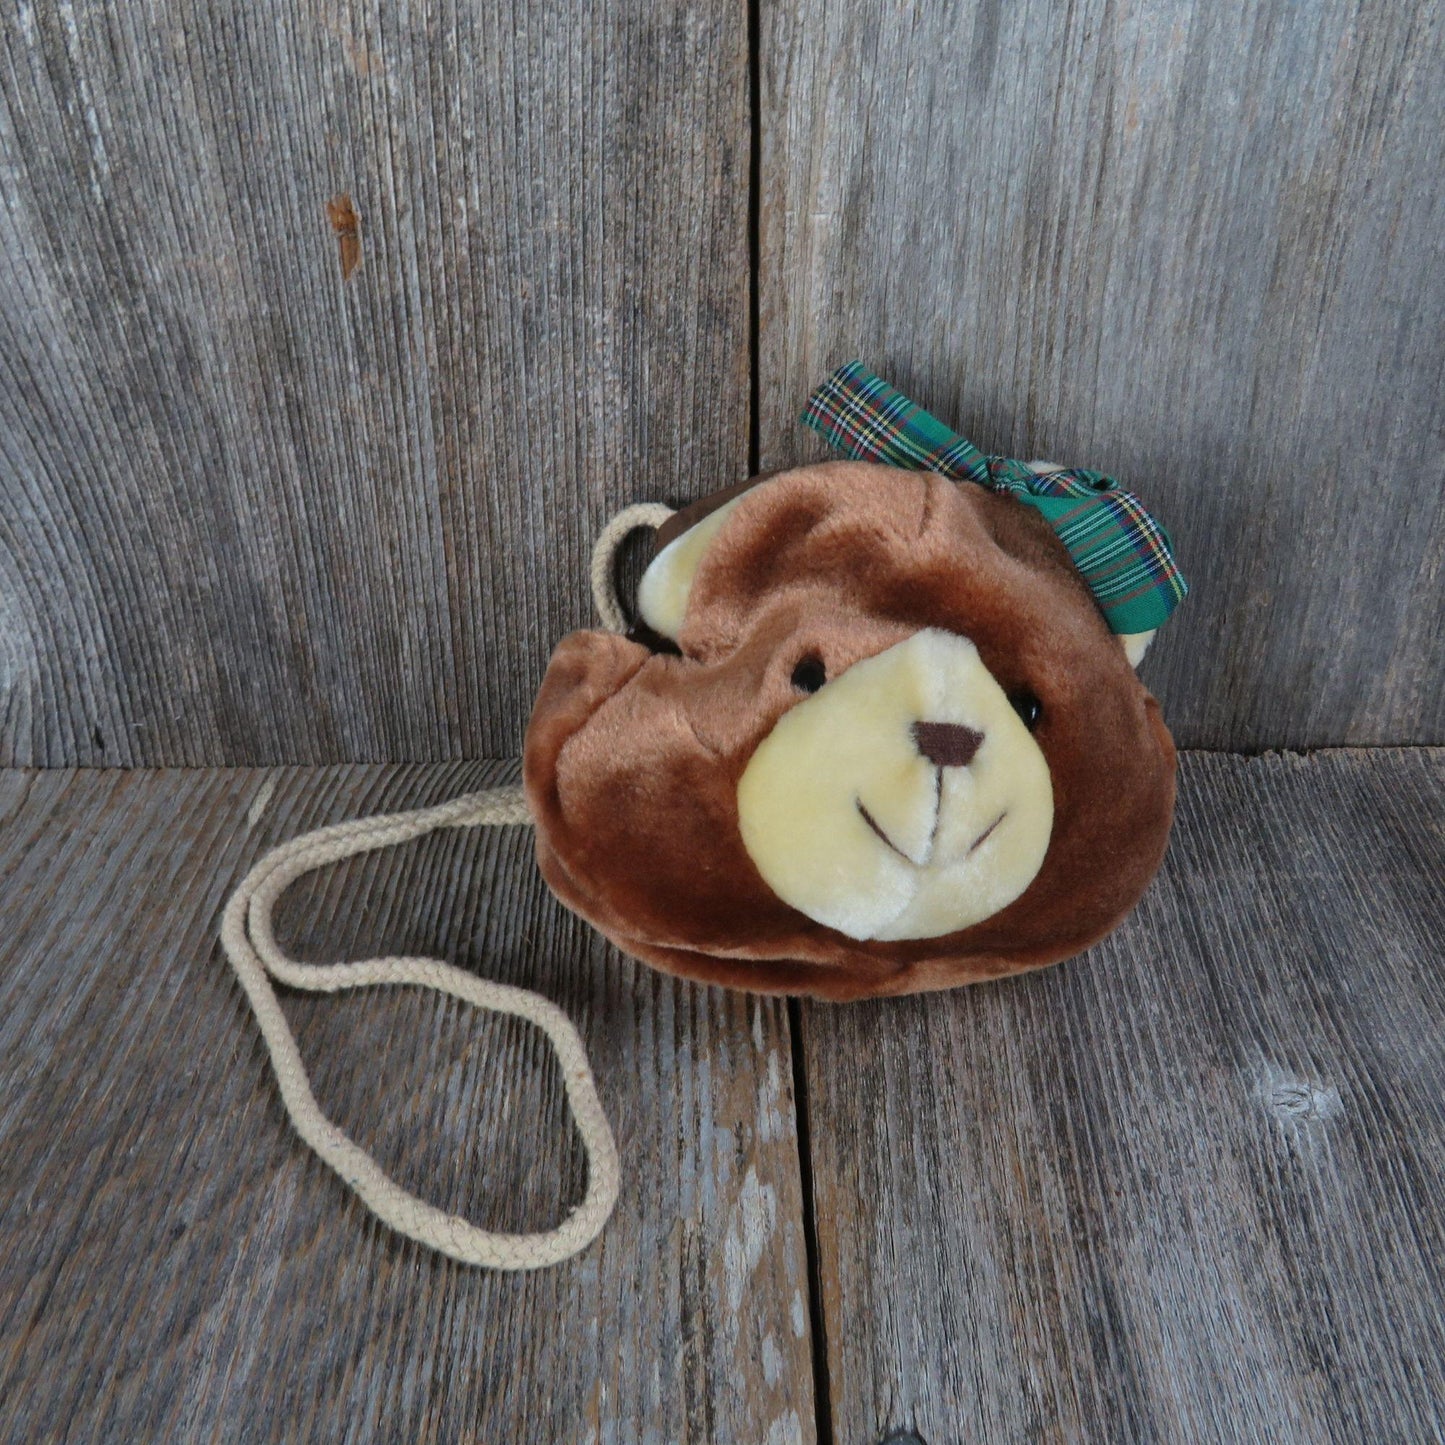 Vintage Teddy Bear Face Purse Plush Green Plaid Bow Child's Shoulder Bag Pocket Book 1996 Confetti Bag Bazaar stuffed Animal